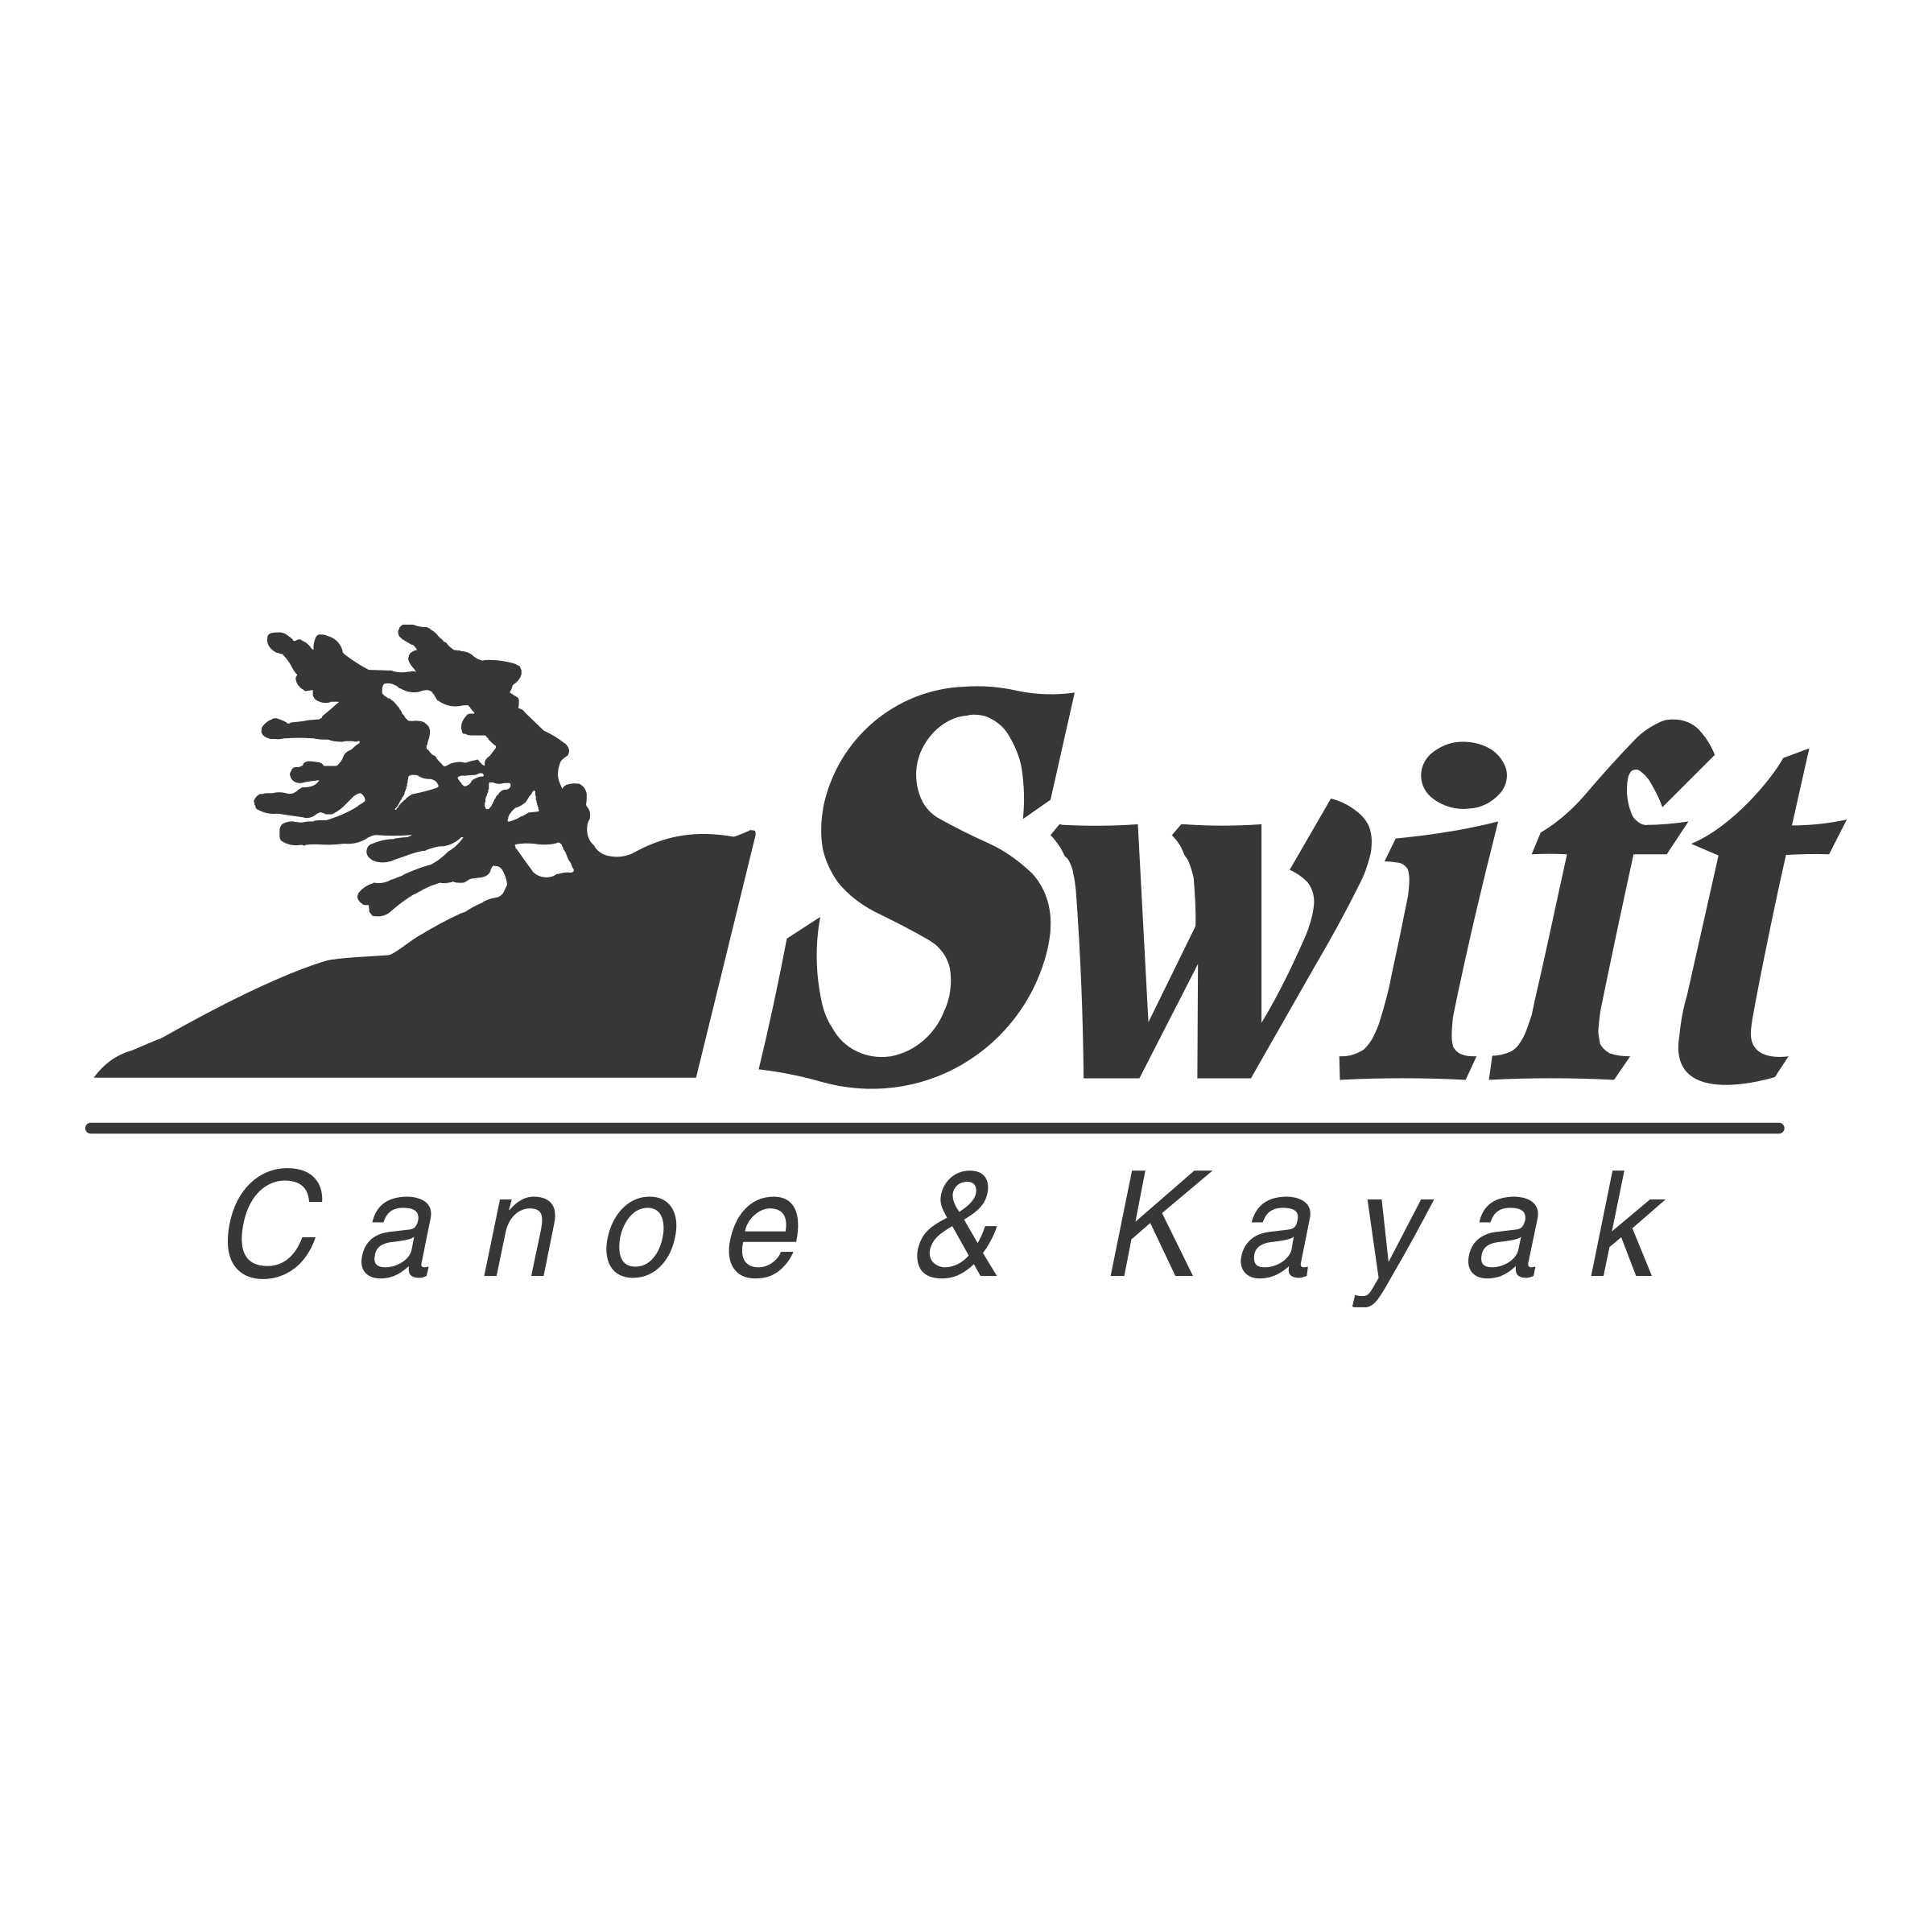 Kyak Logo - Swift Canoe & Kayak Logo PNG Transparent & SVG Vector - Freebie Supply